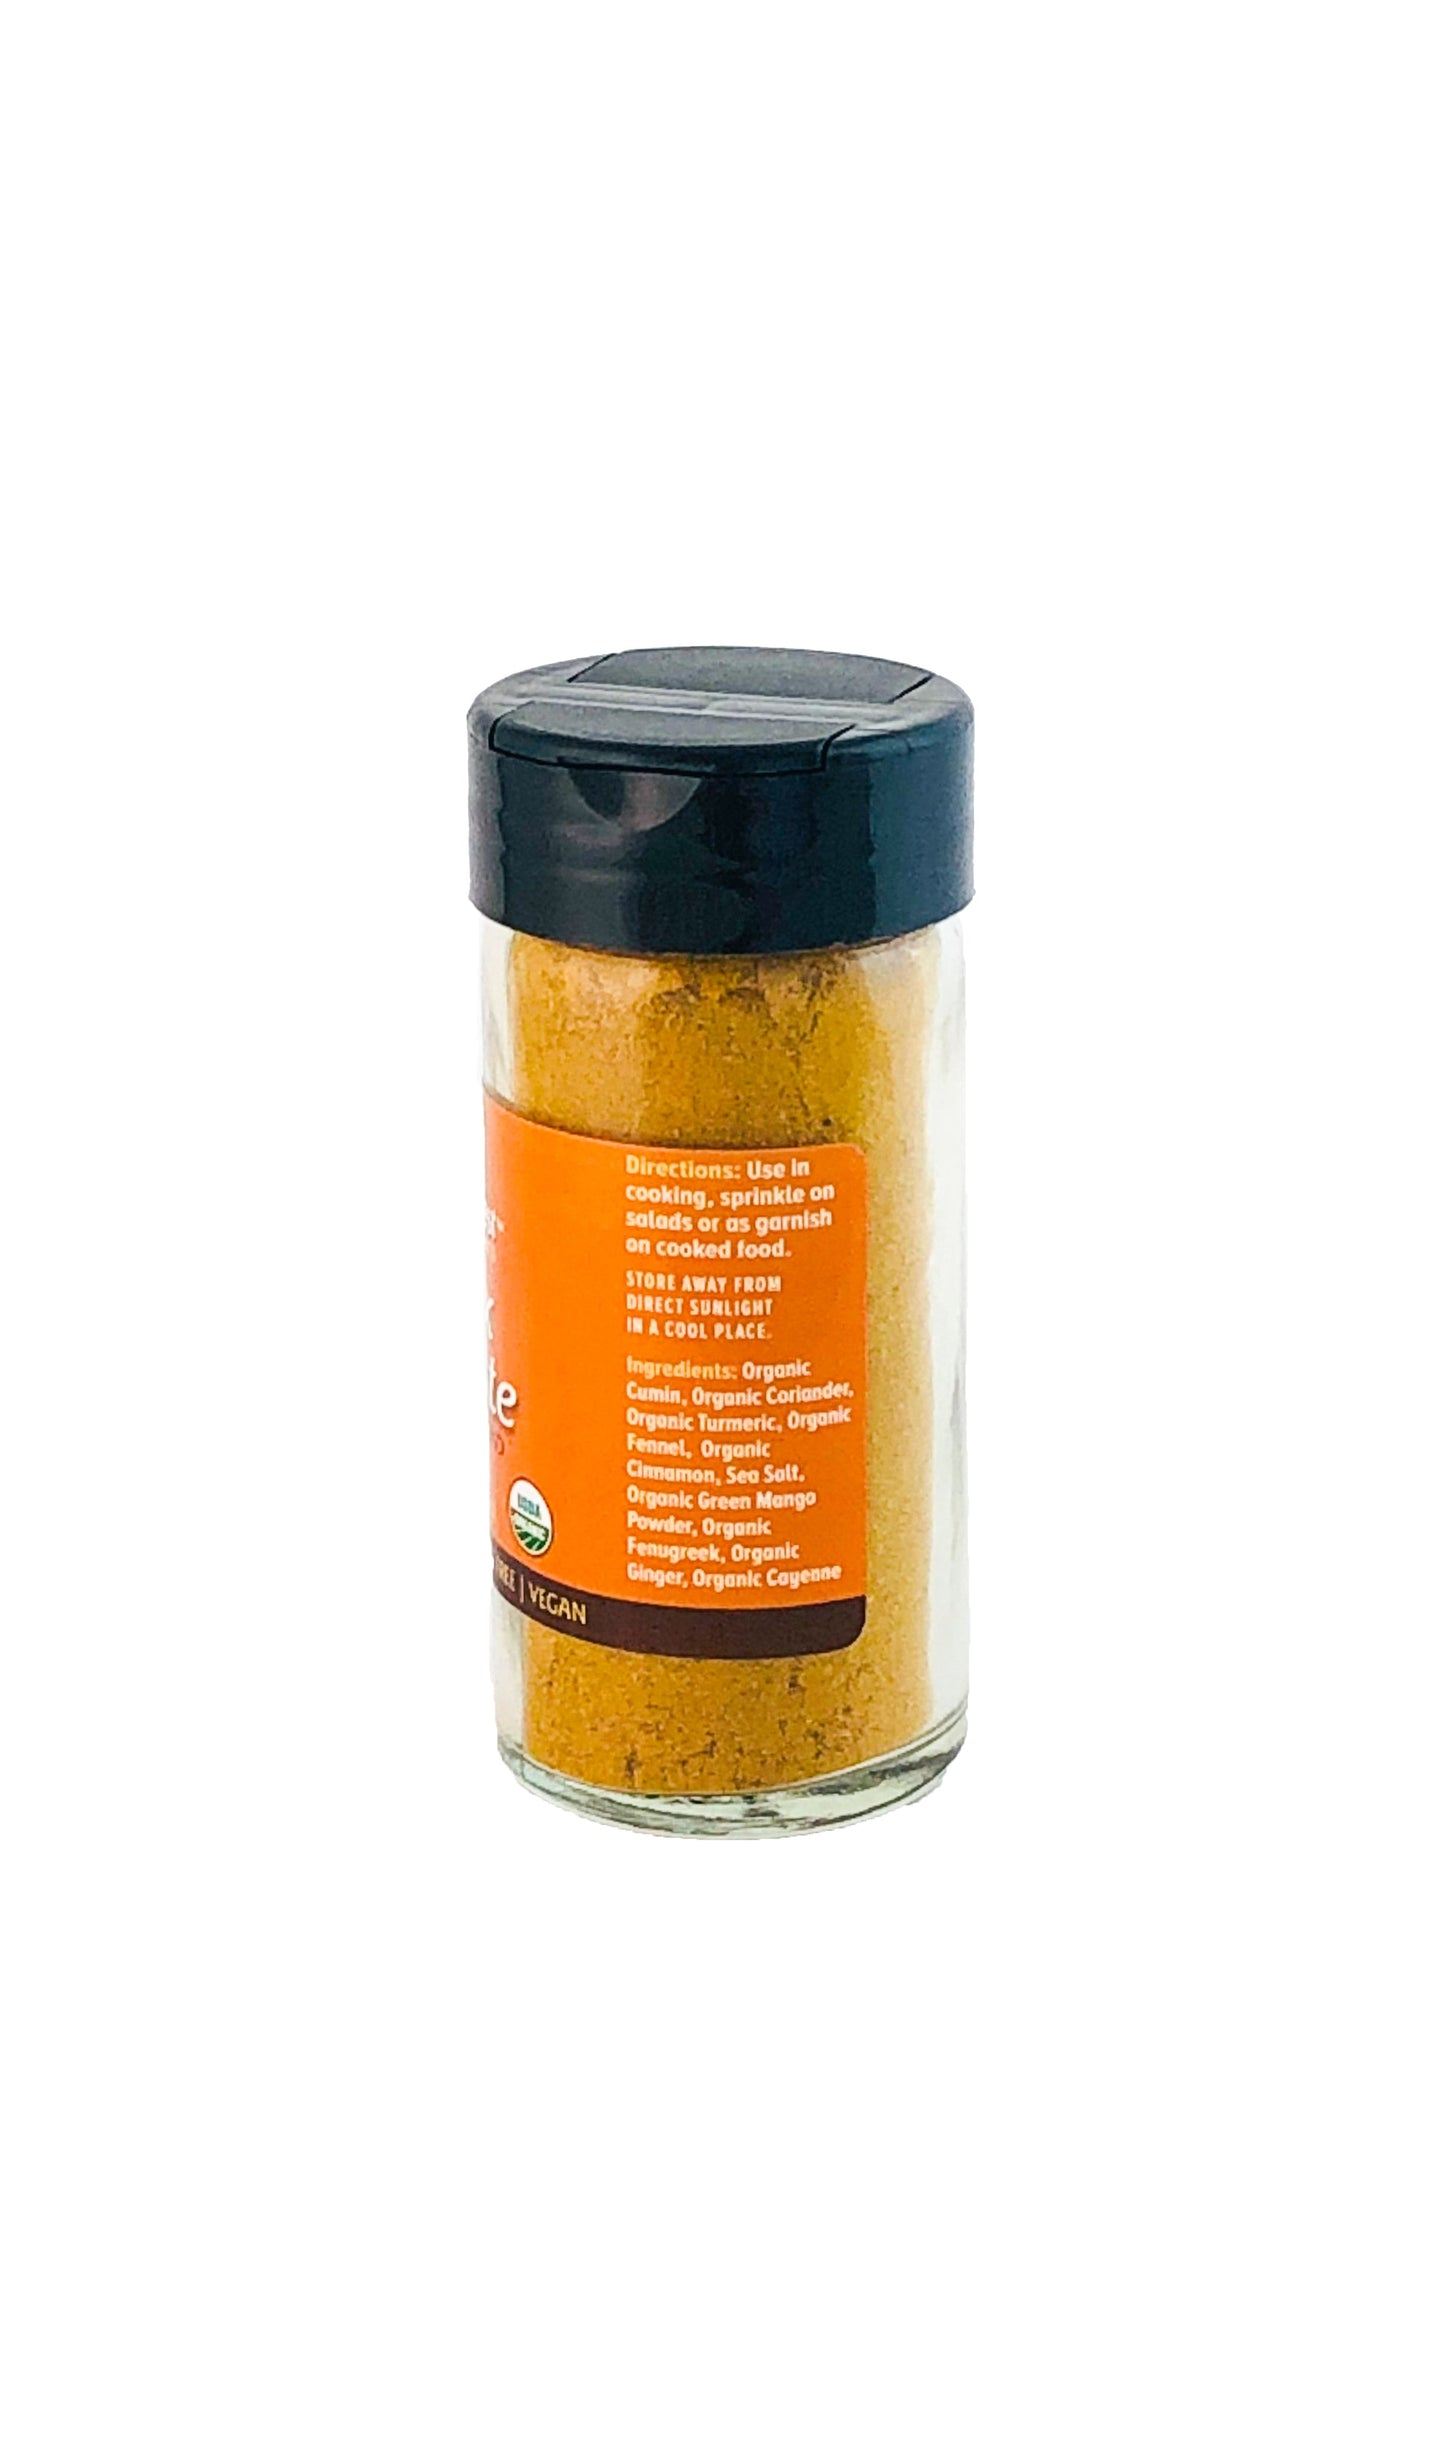 Wholesale Organic Six Taste Spice 1.7oz (50g)